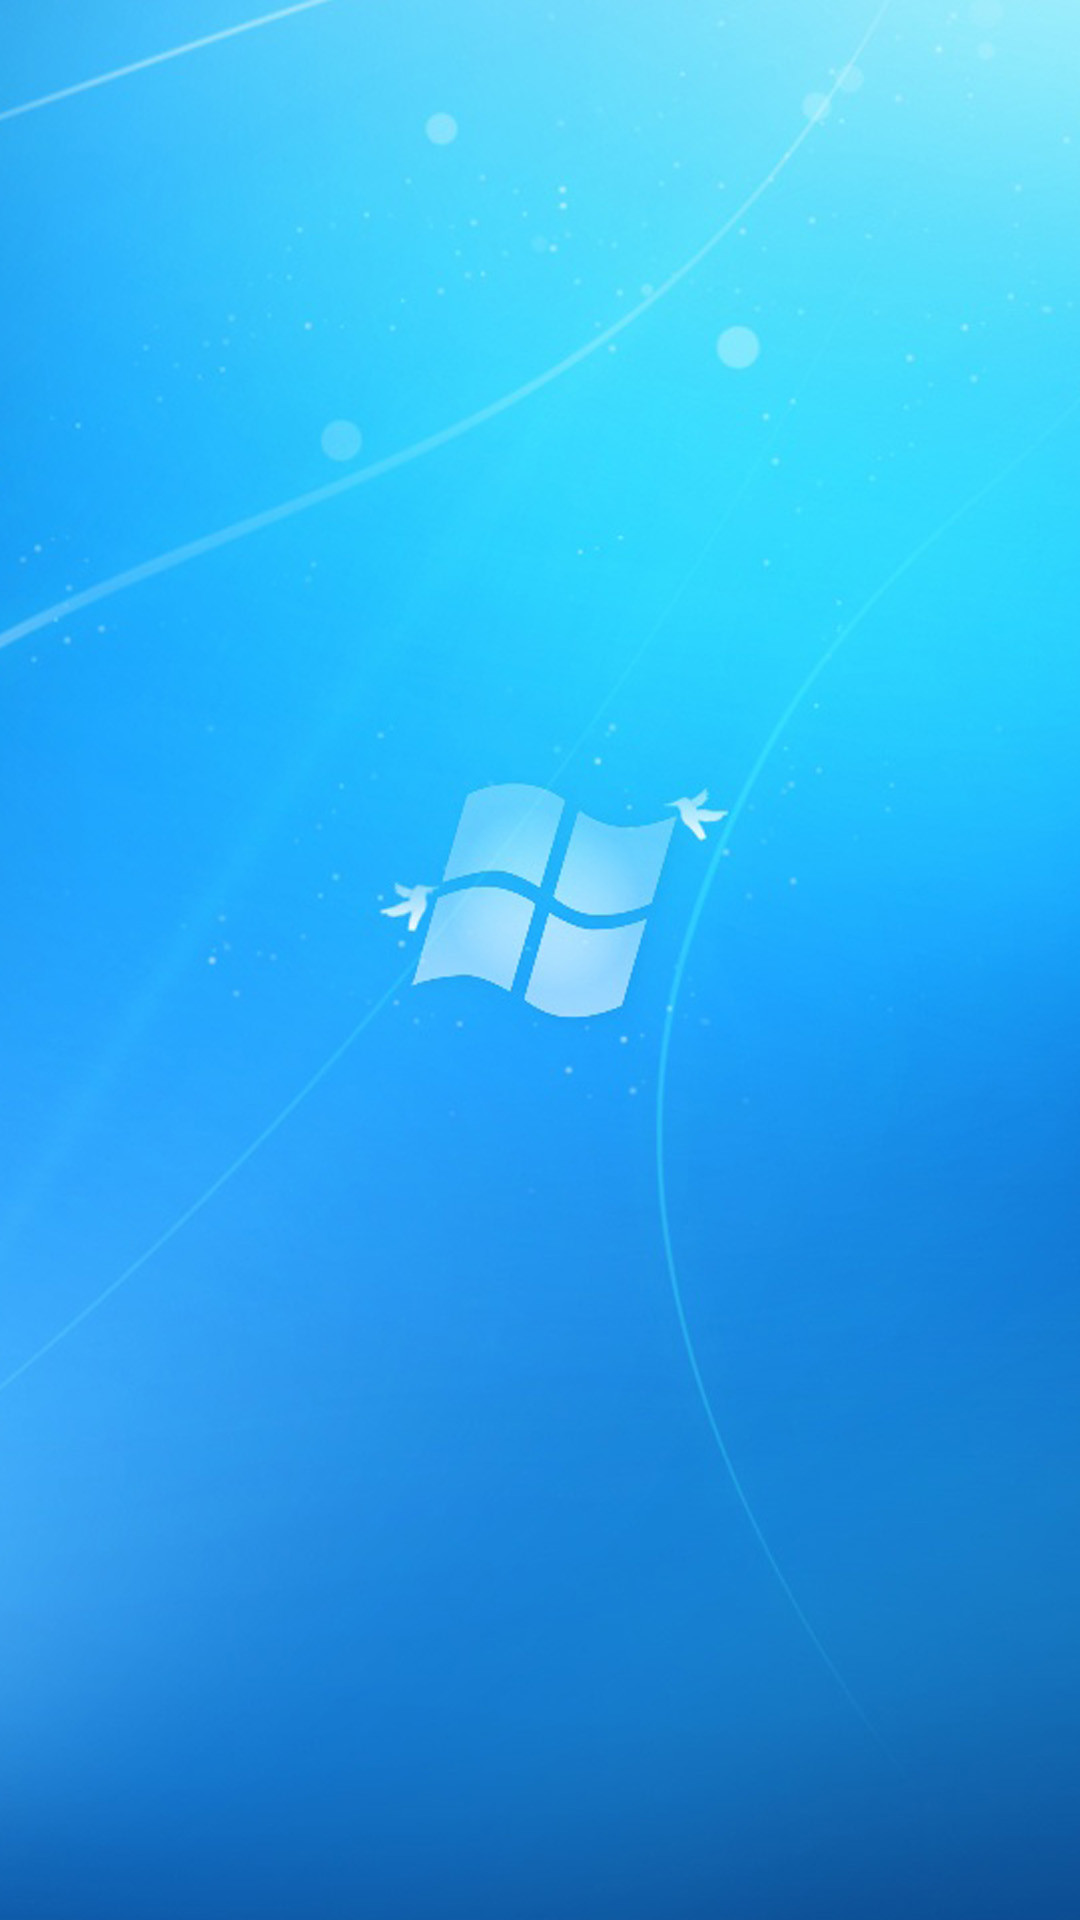 Windows 7 blue 1080p hd Galaxy s5 Wallpaper